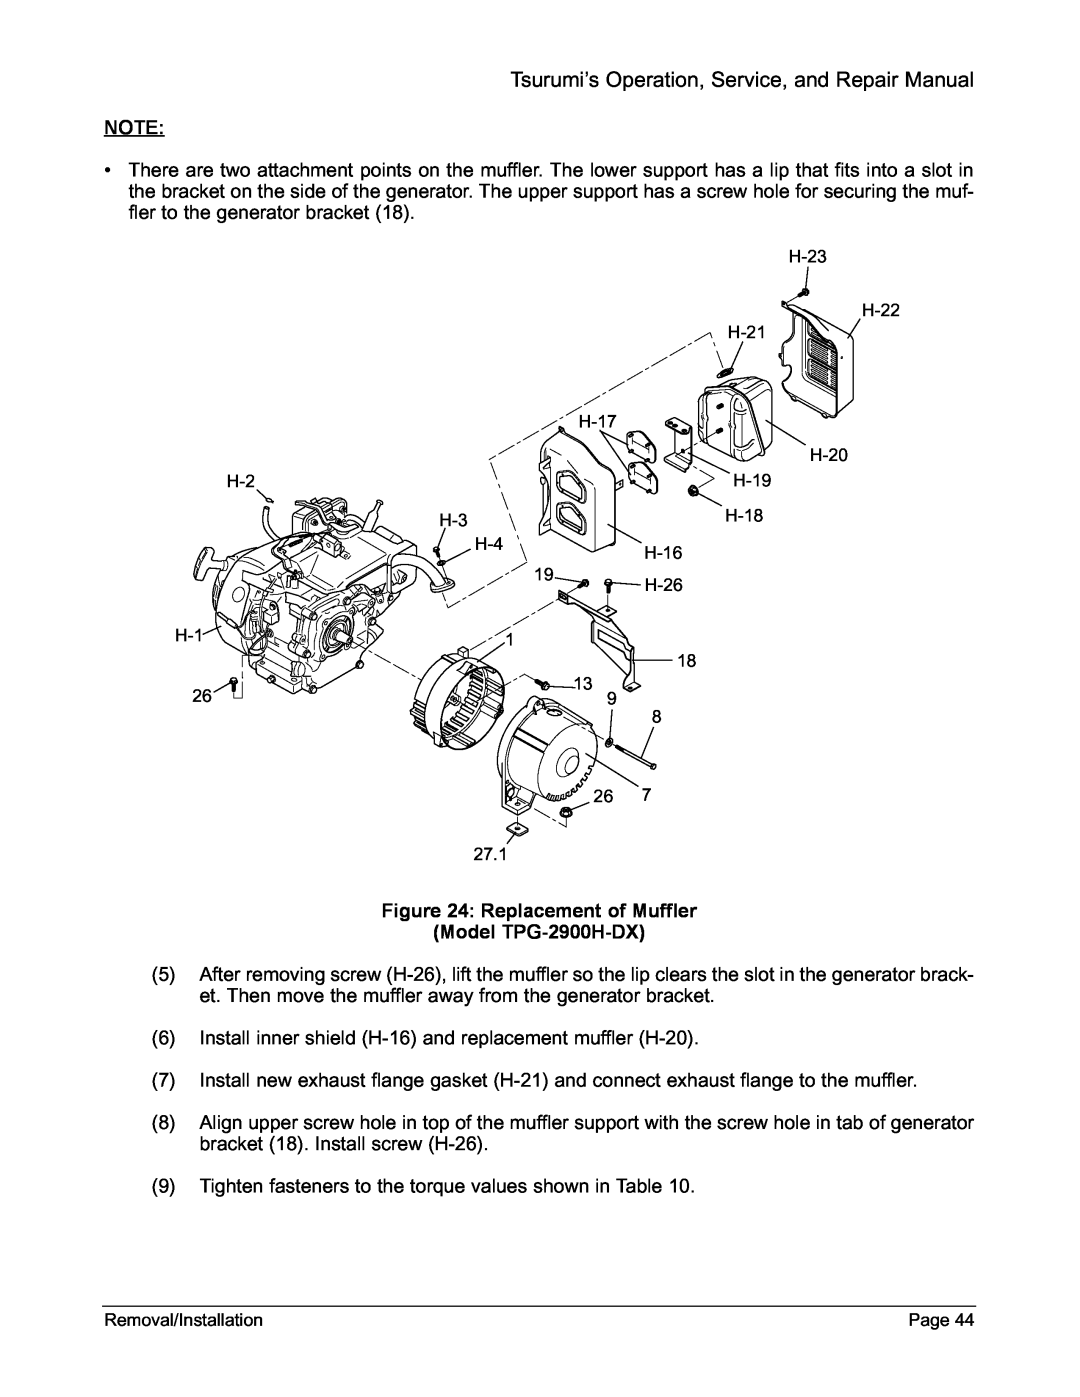 Honda Power Equipment TPG-4300H-DX, TPG-2900H-DX Tsurumi’s Operation, Service, and Repair Manual, Replacement of Muffler 